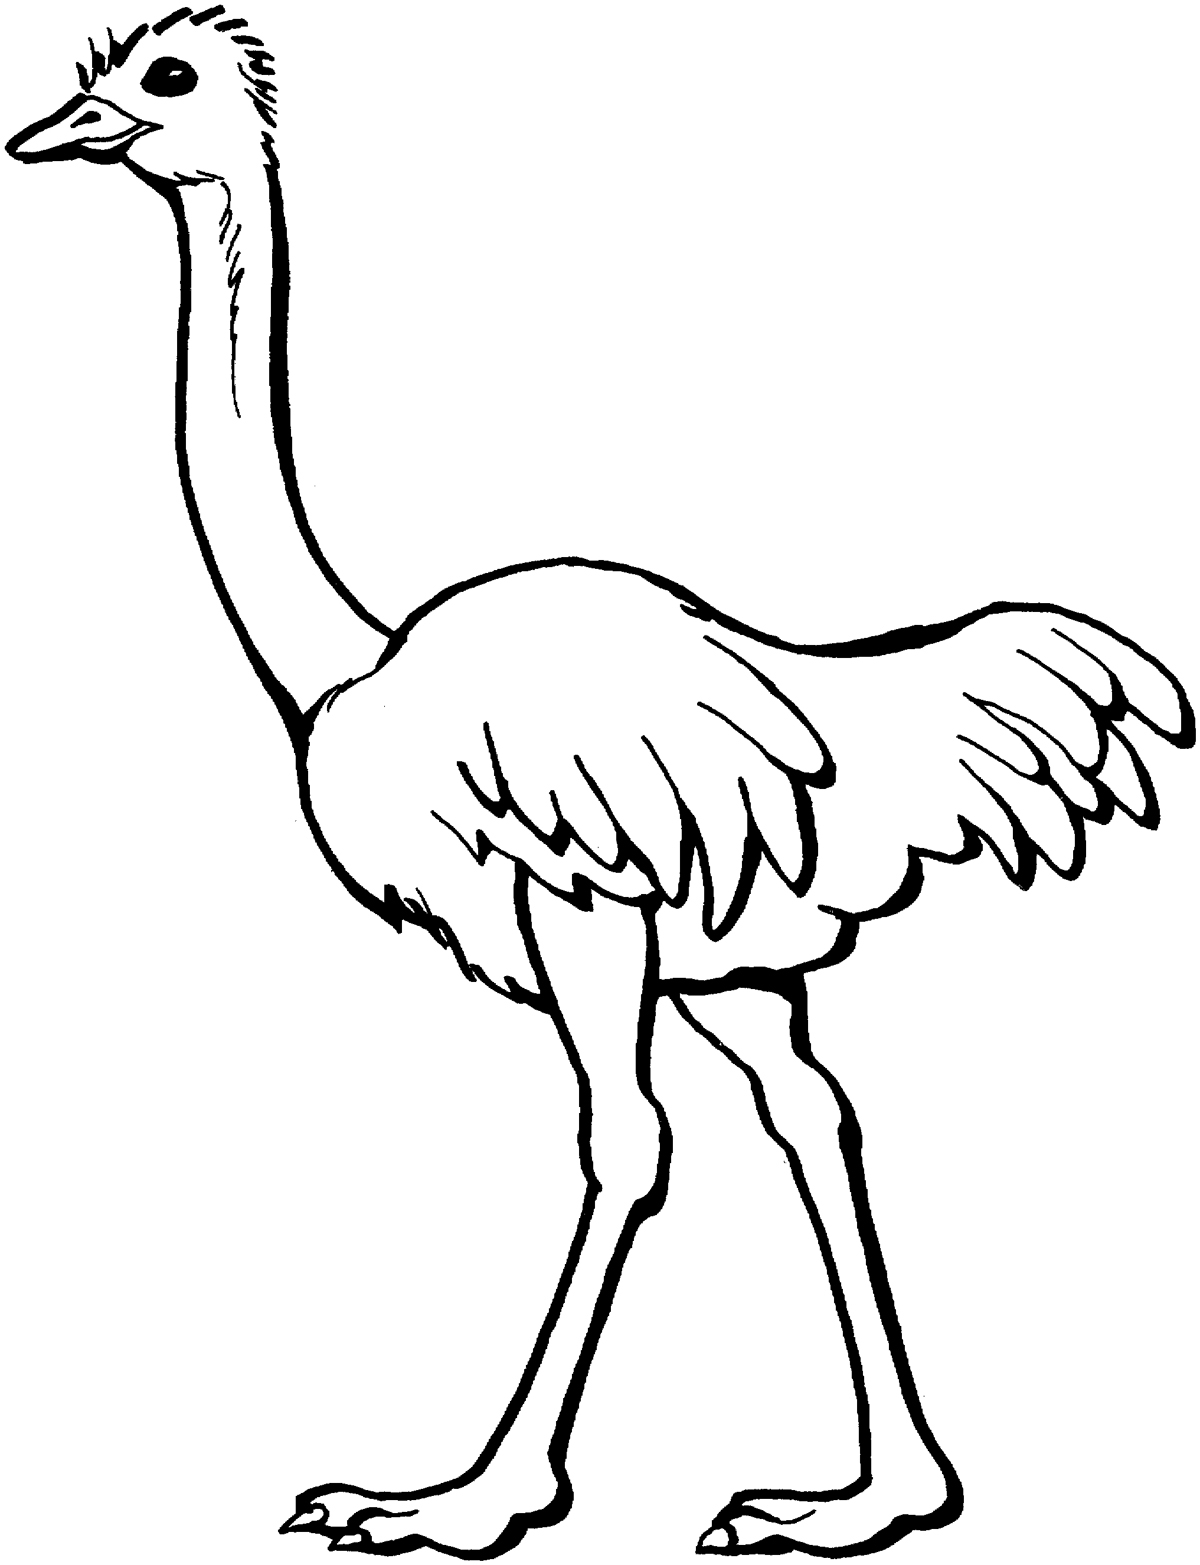 A small ostrich